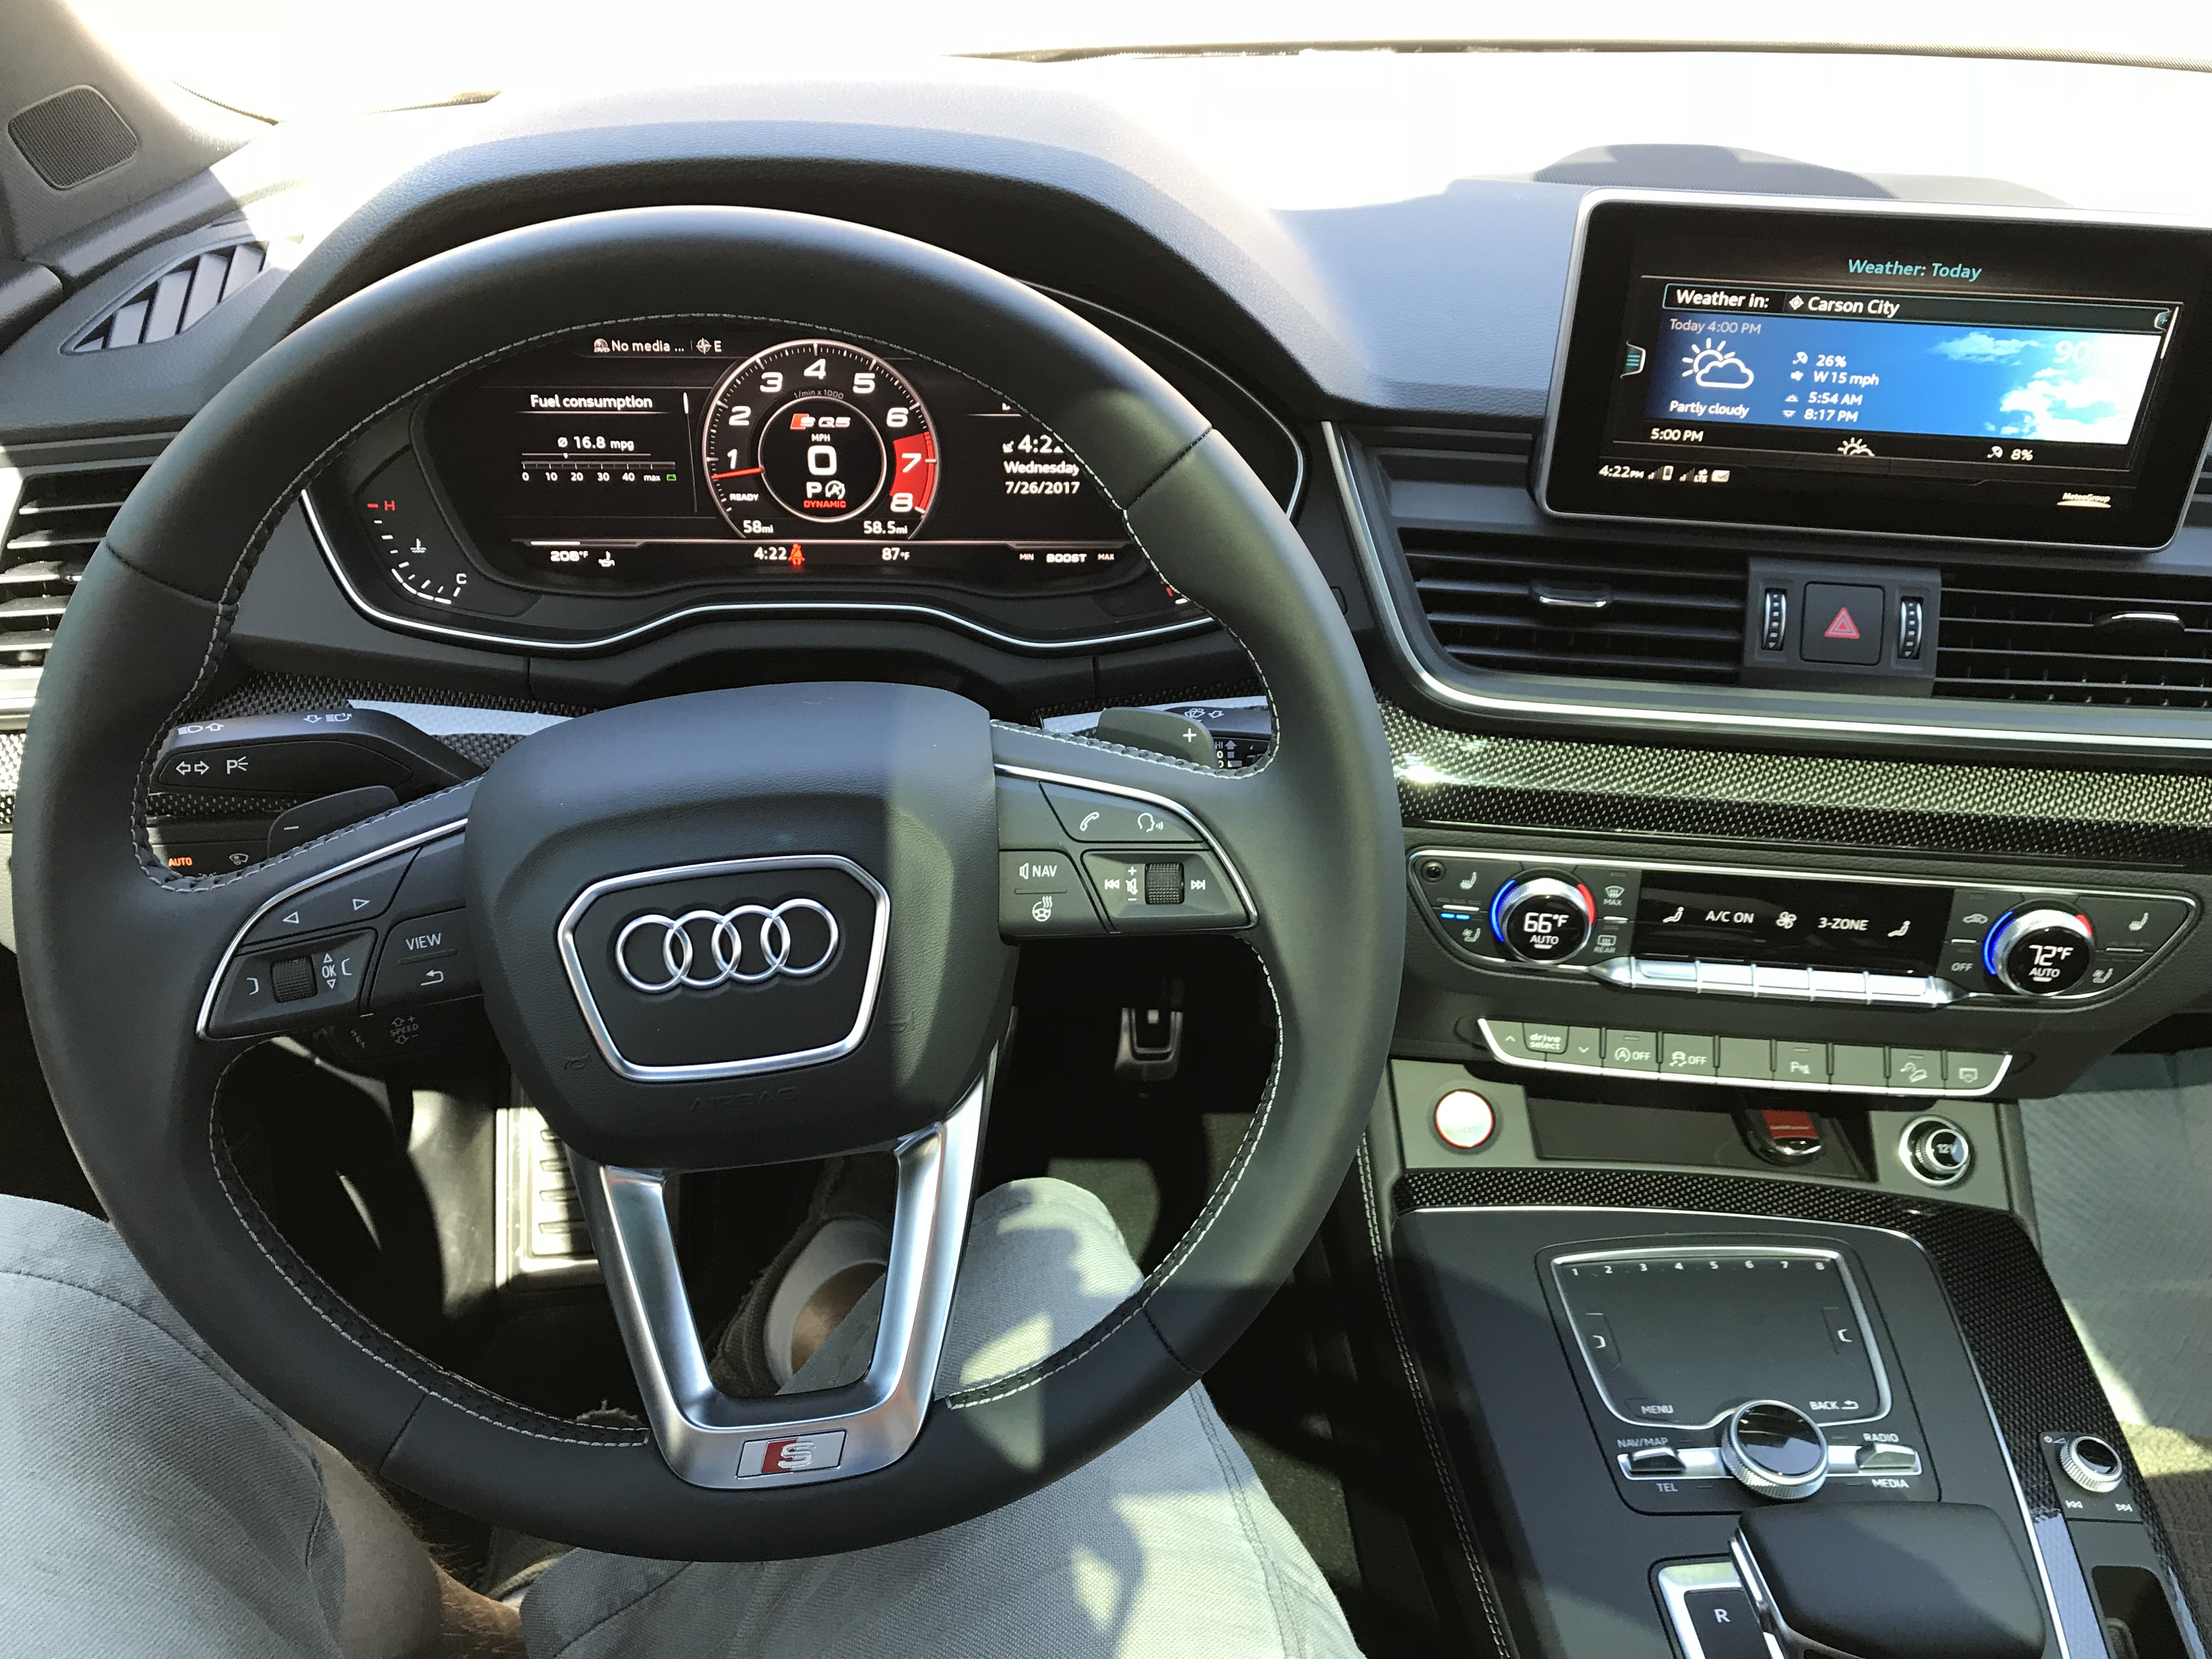 Now Driving 2018 Moonlight Blue Metallic Sq5 Prestige Audiworld Forums